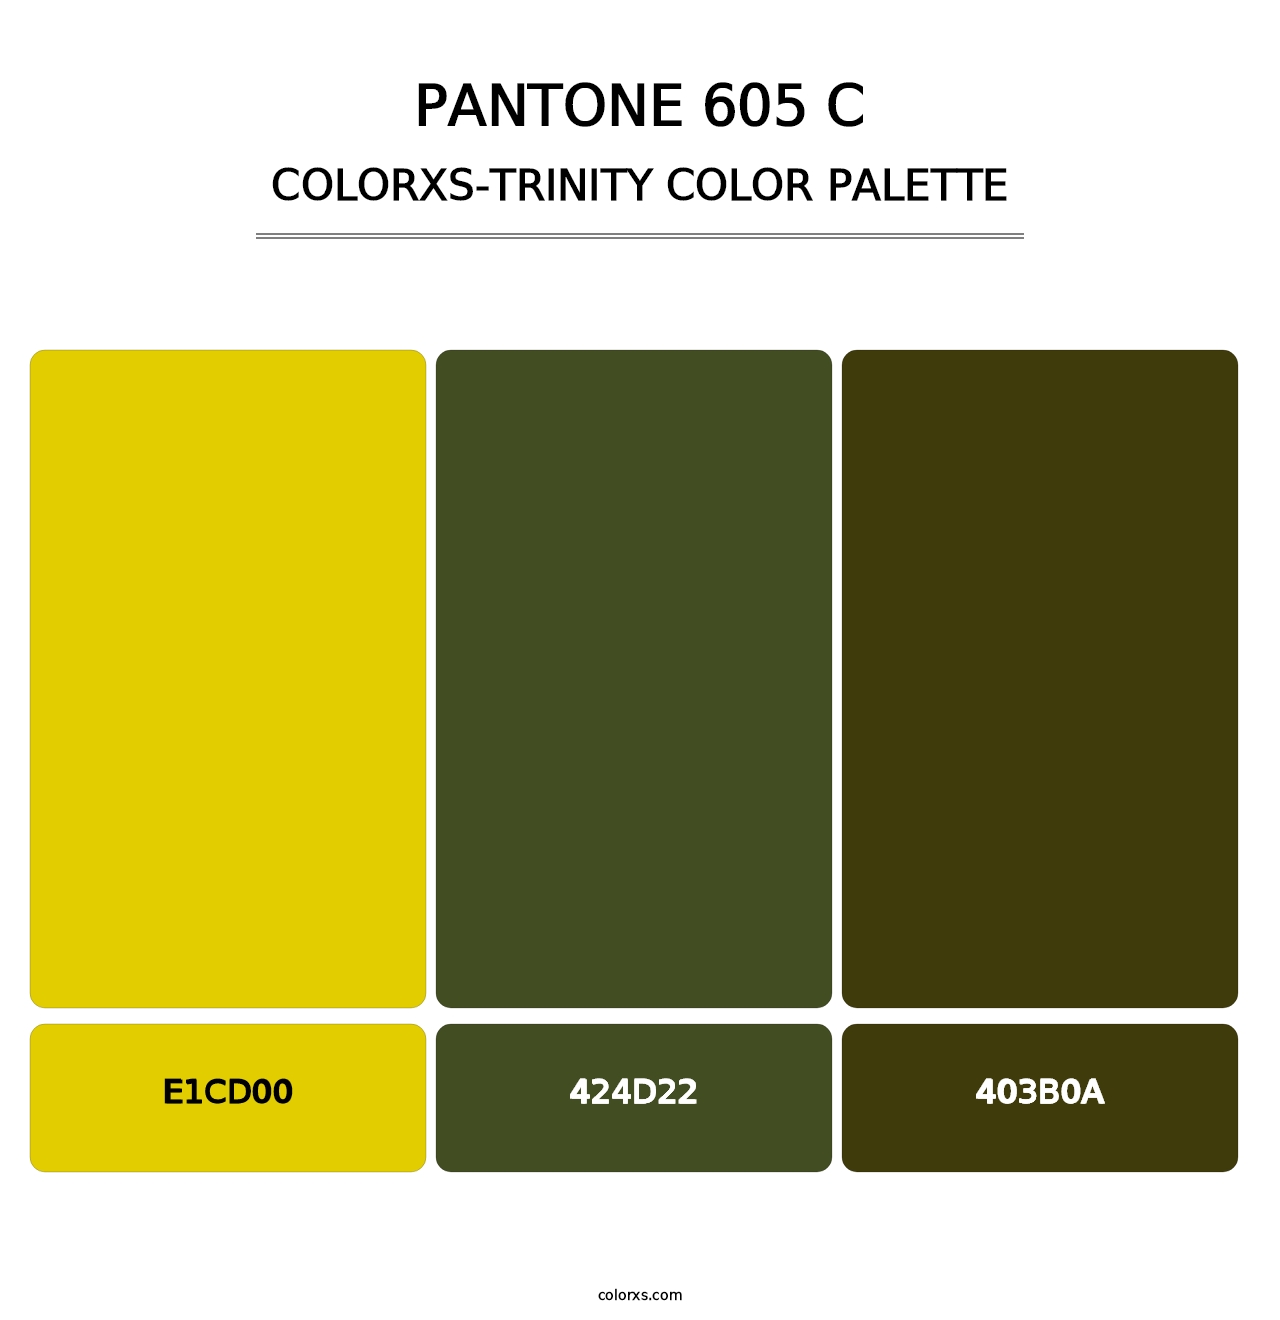 PANTONE 605 C - Colorxs Trinity Palette